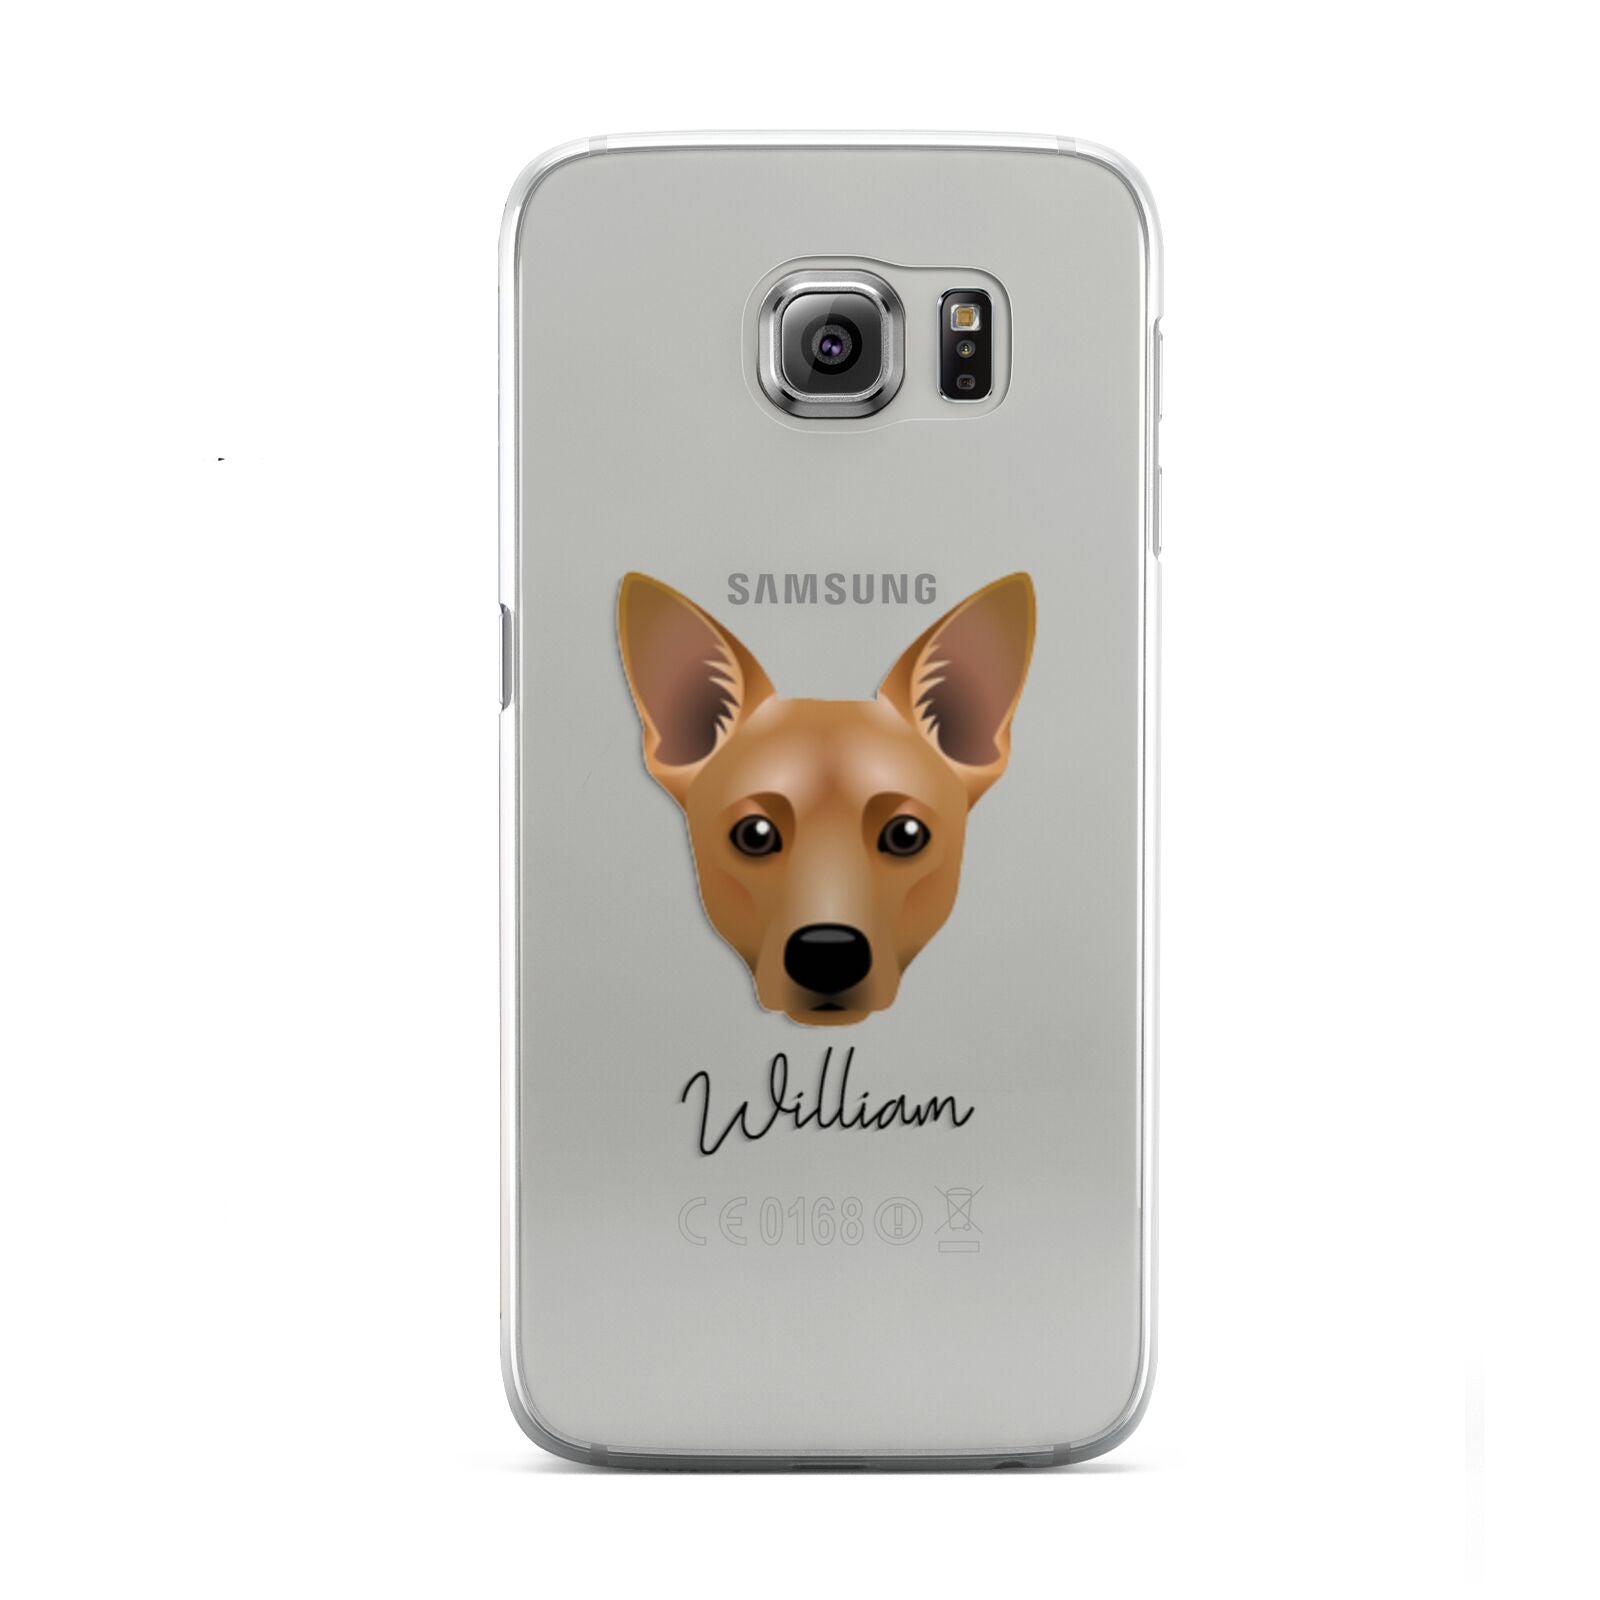 Cojack Personalised Samsung Galaxy S6 Case